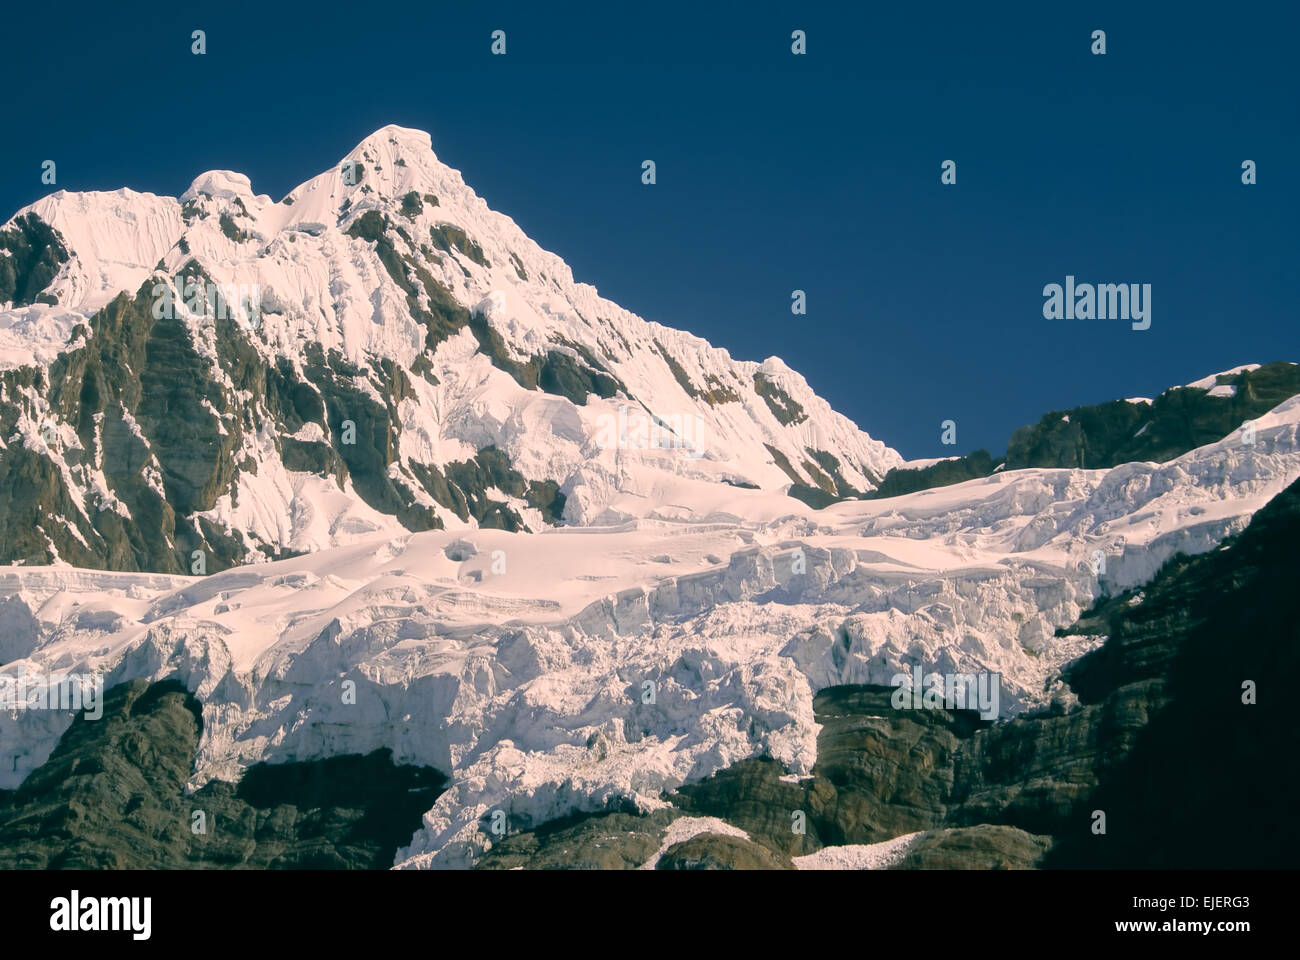 Majestic peak covered by snow in Peruvian Andes, Cordillera Blanca Stock Photo